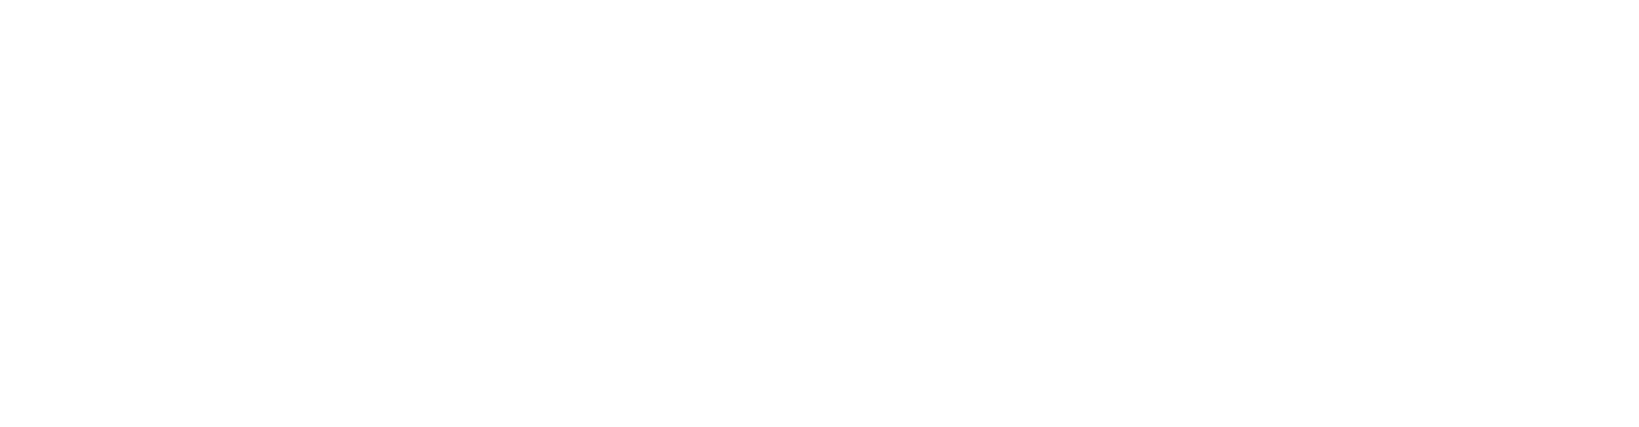 Mark Wbb Logo